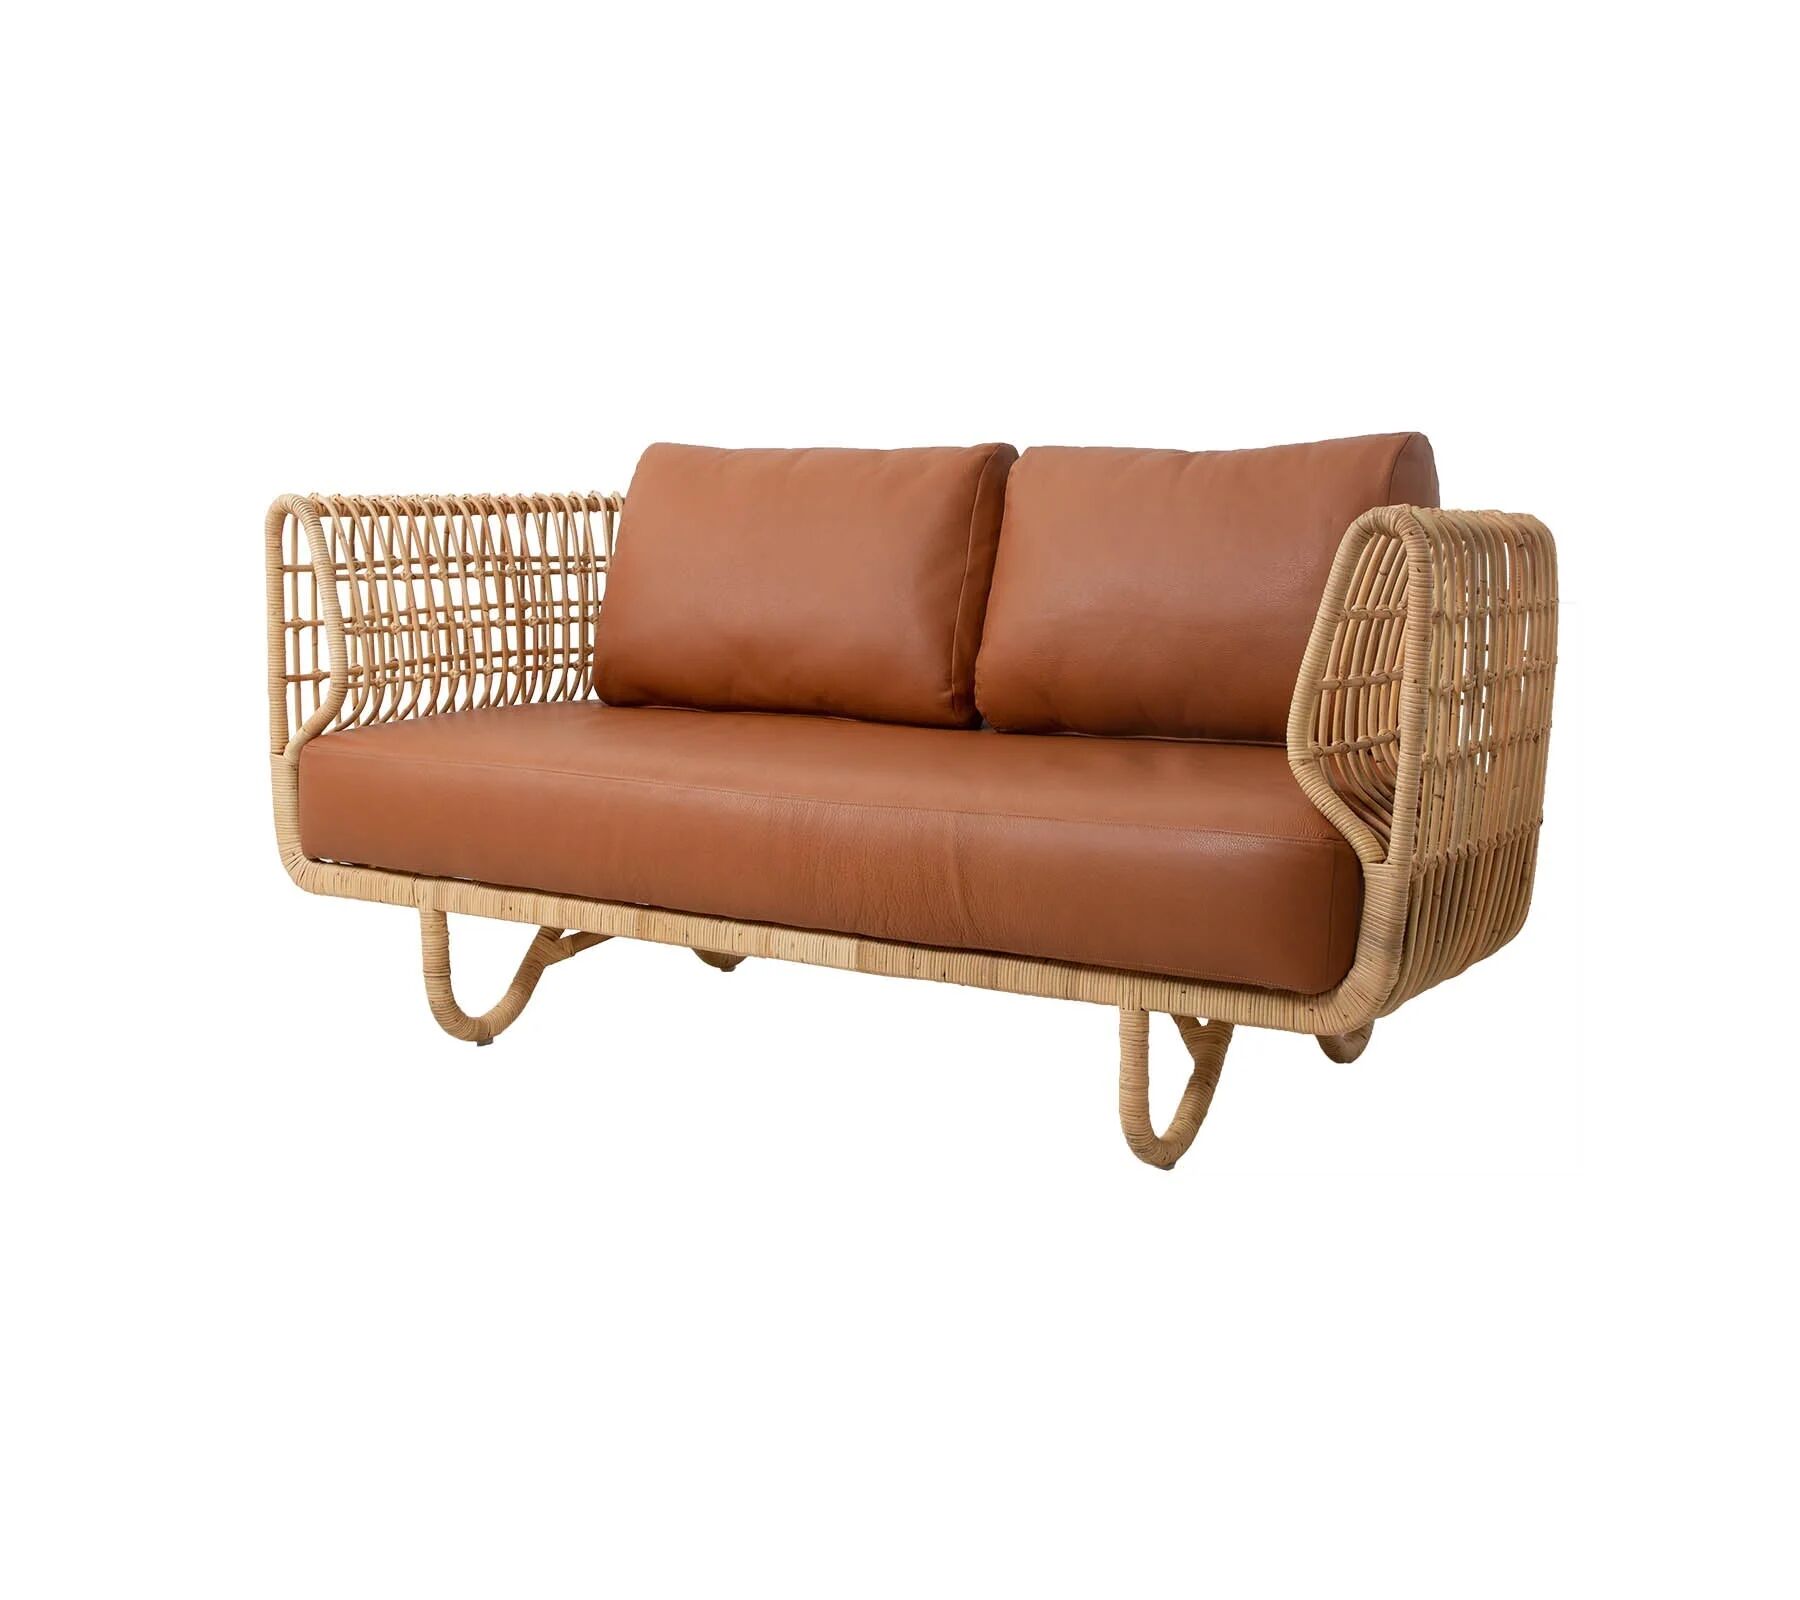 Cane-line Nest 2-Seater Sofa, Cognac, Leather